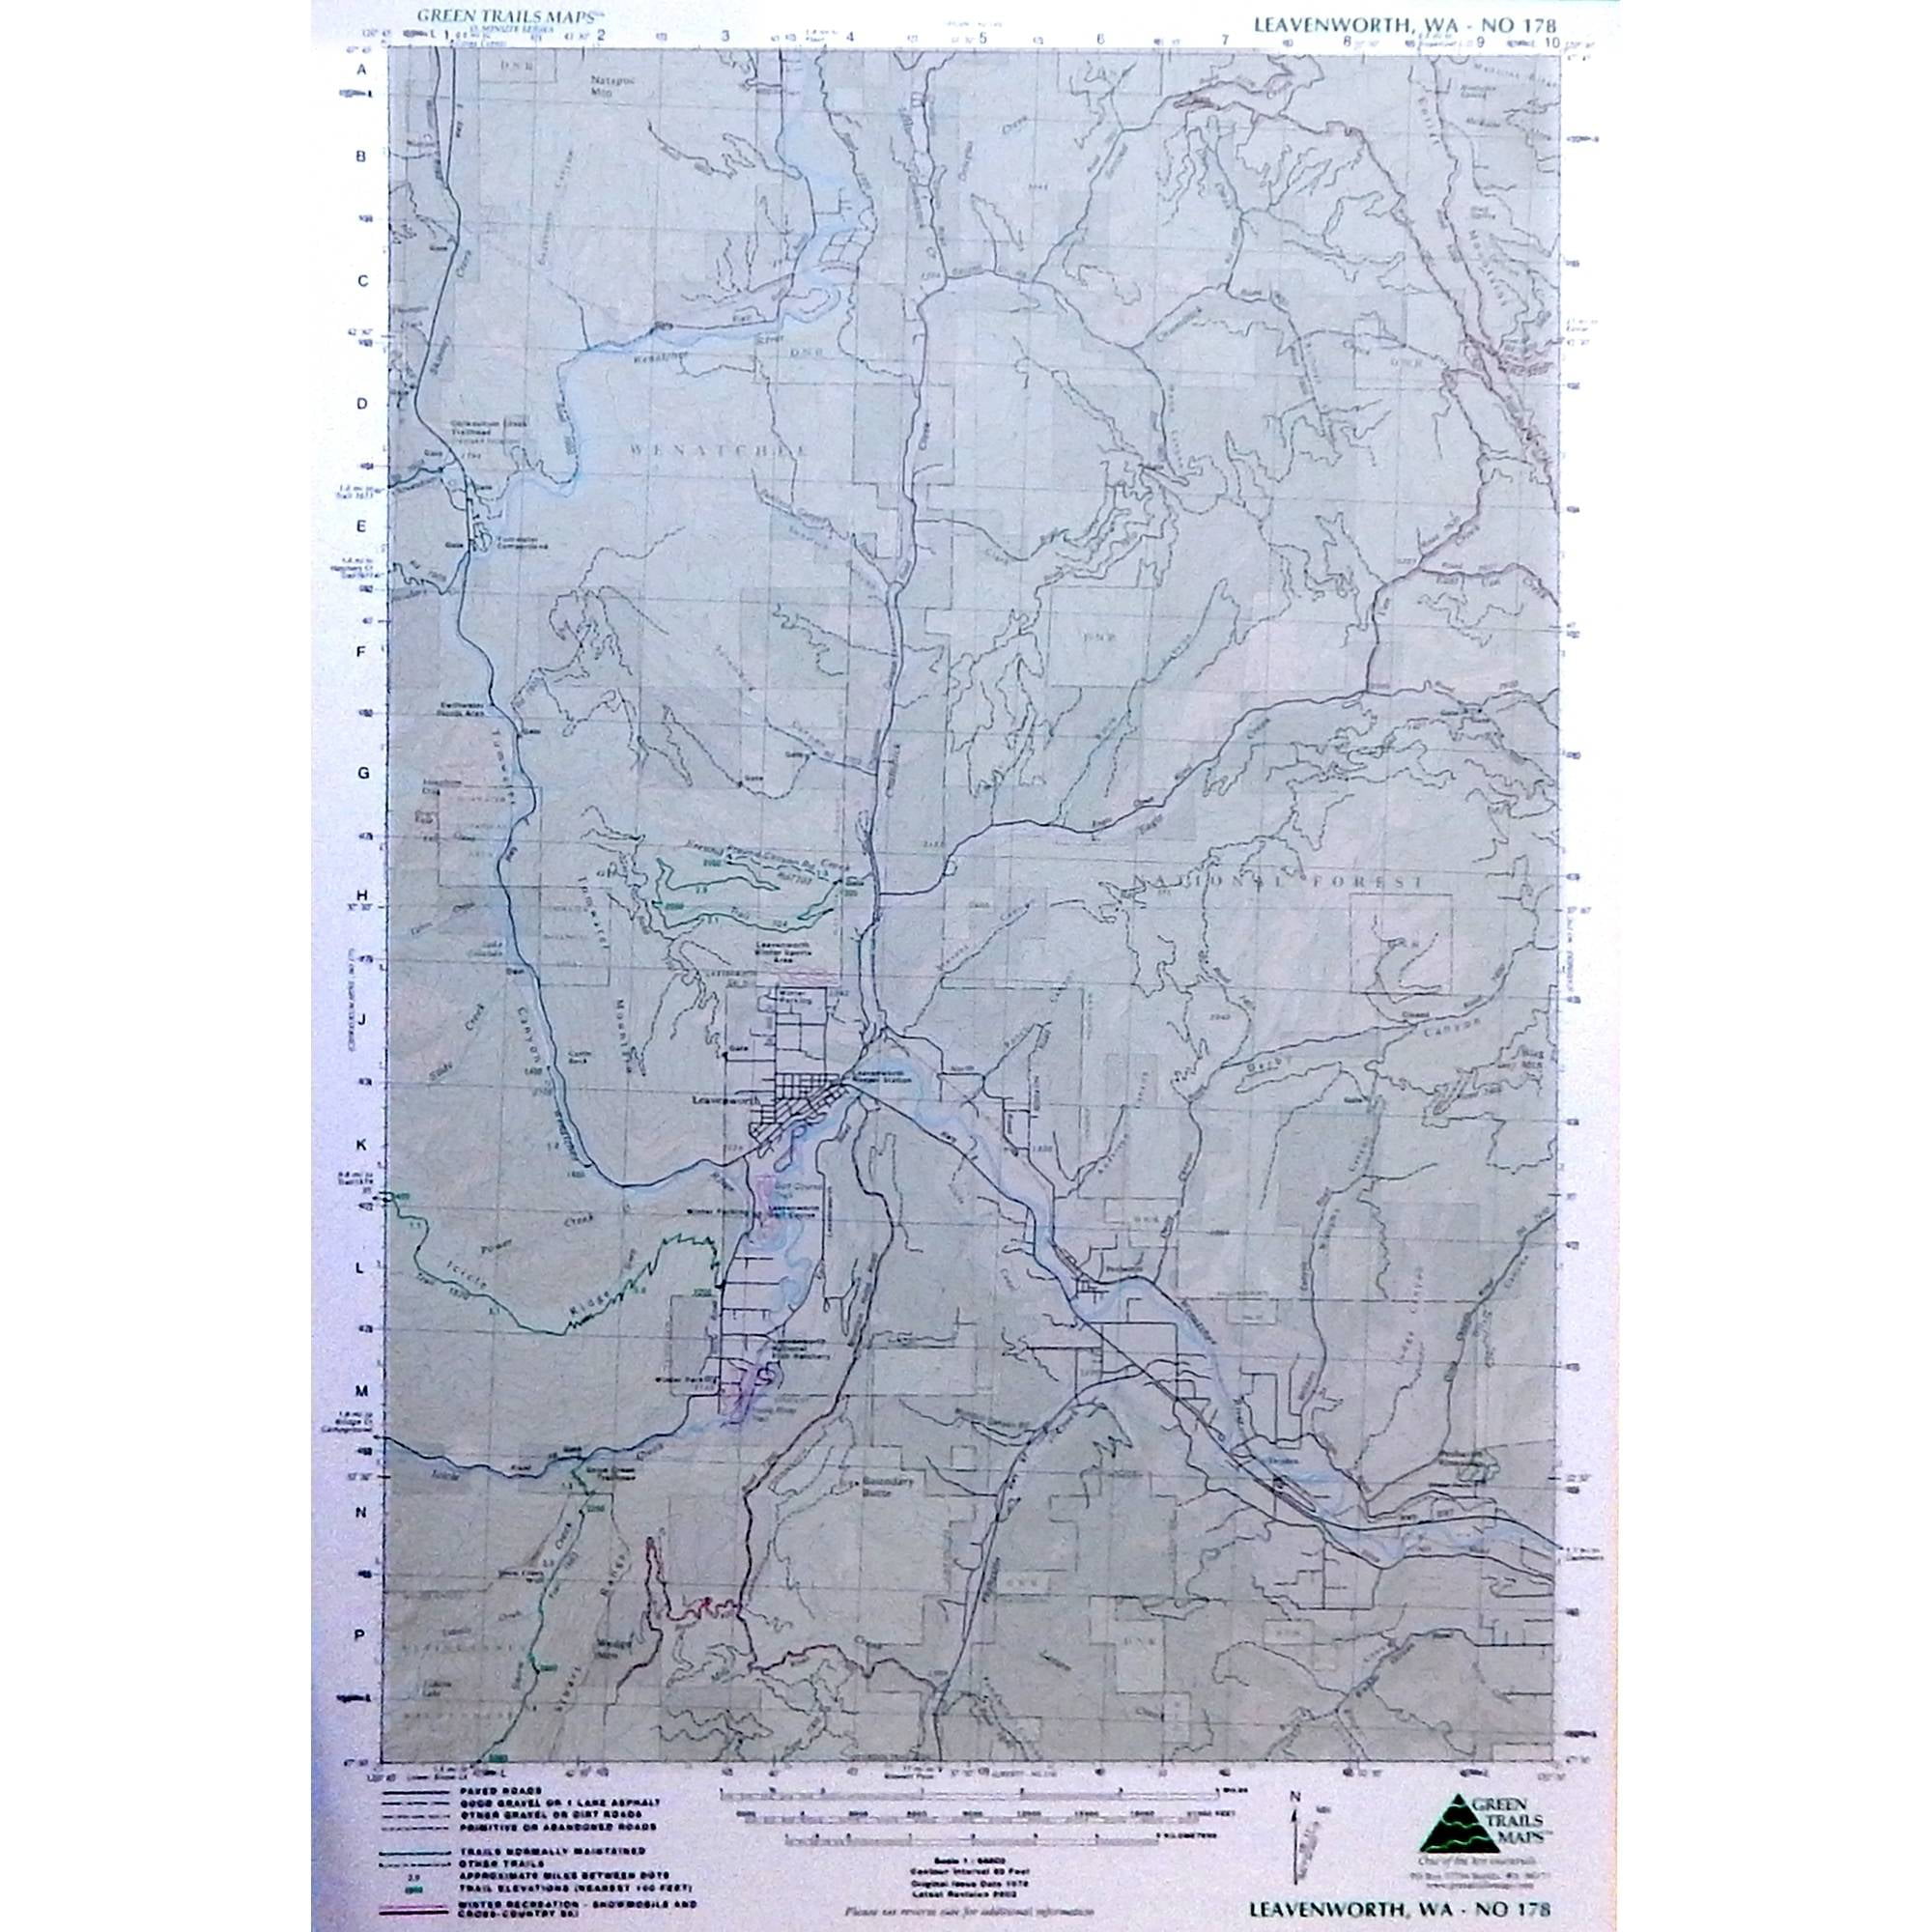 Leavenworth 178 Green Trails Maps 